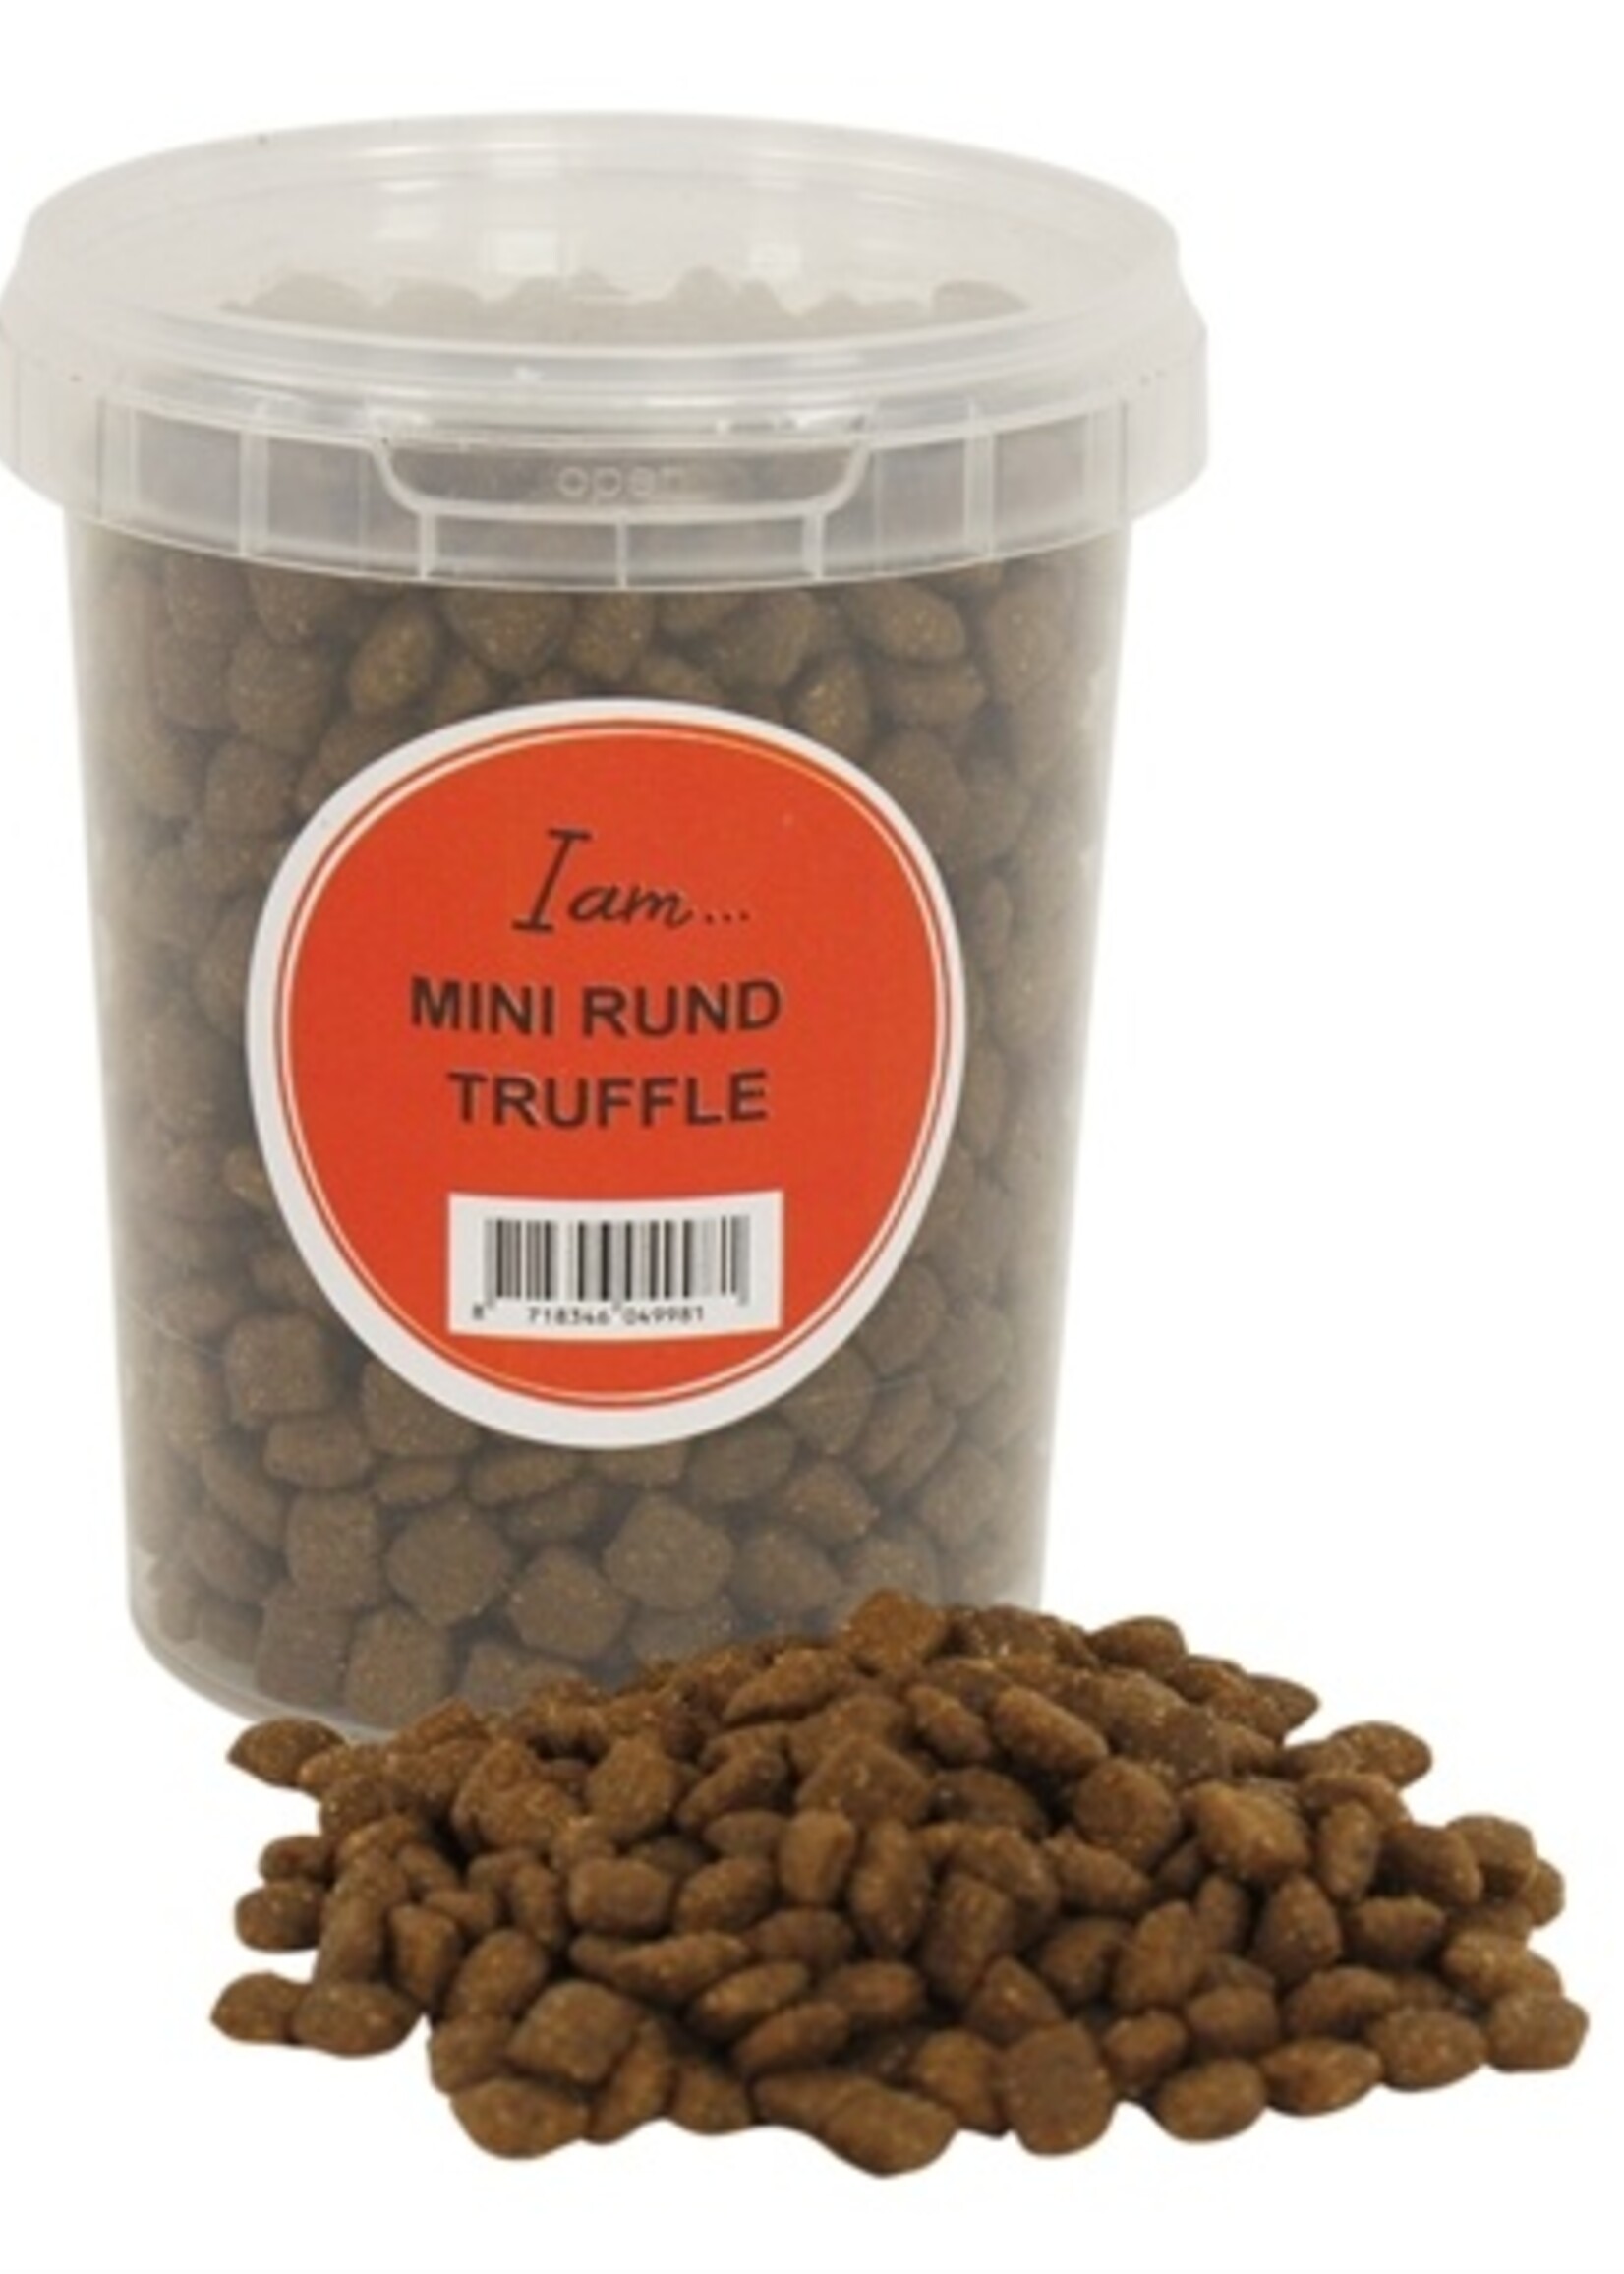 I am I am mini rund truffle